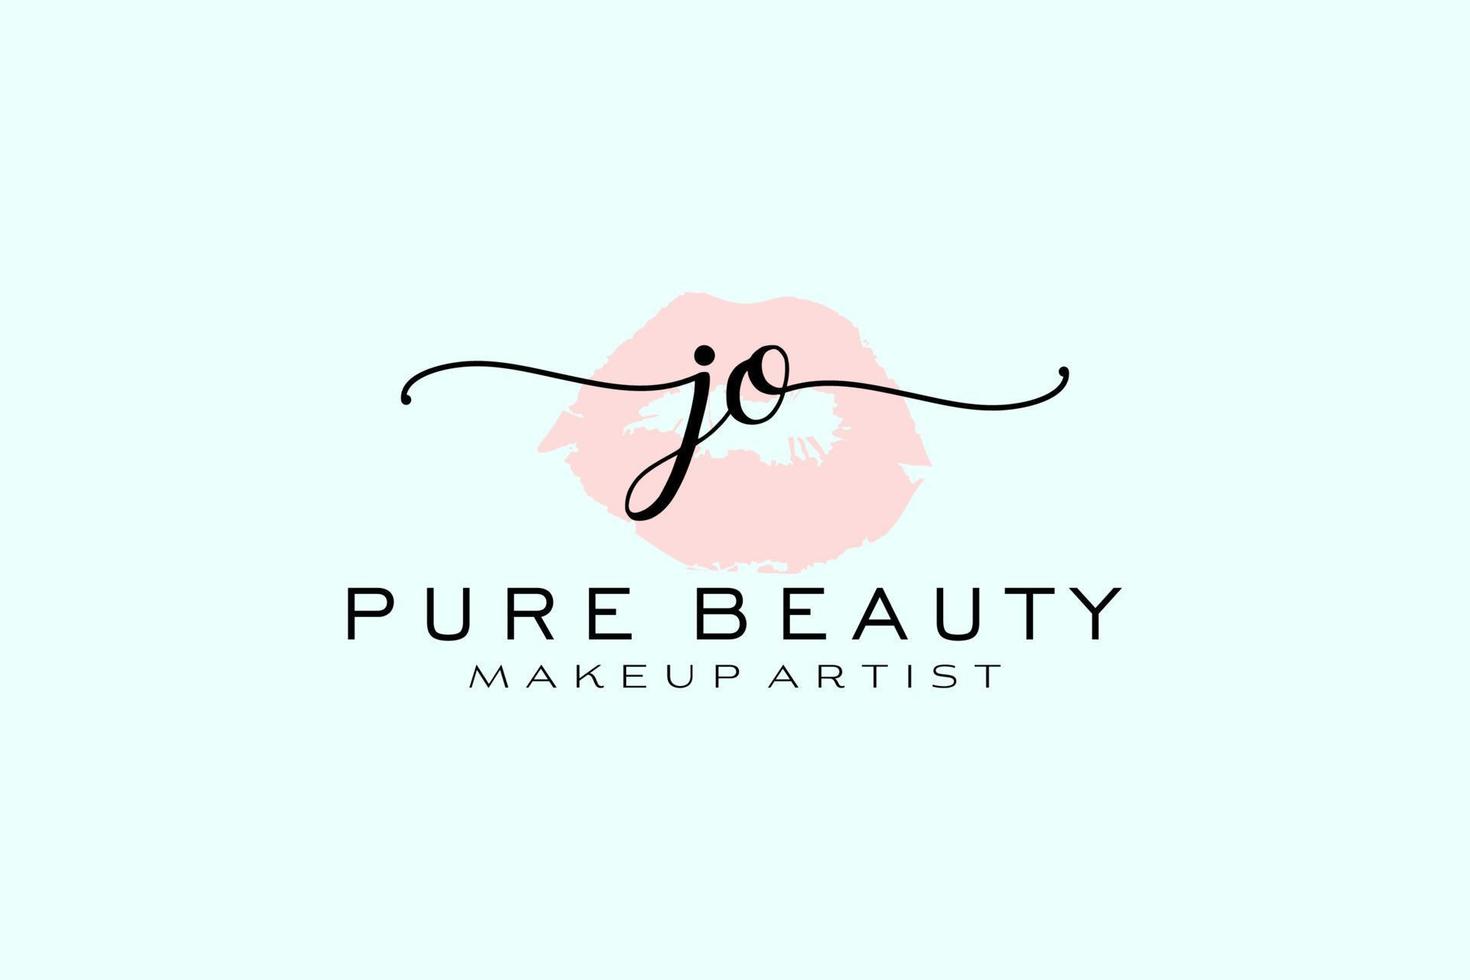 Initial Jo Aquarell Lippen vorgefertigtes Logo-Design, Logo für Make-up-Künstler-Business-Branding, errötendes Beauty-Boutique-Logo-Design, Kalligrafie-Logo mit kreativer Vorlage. vektor